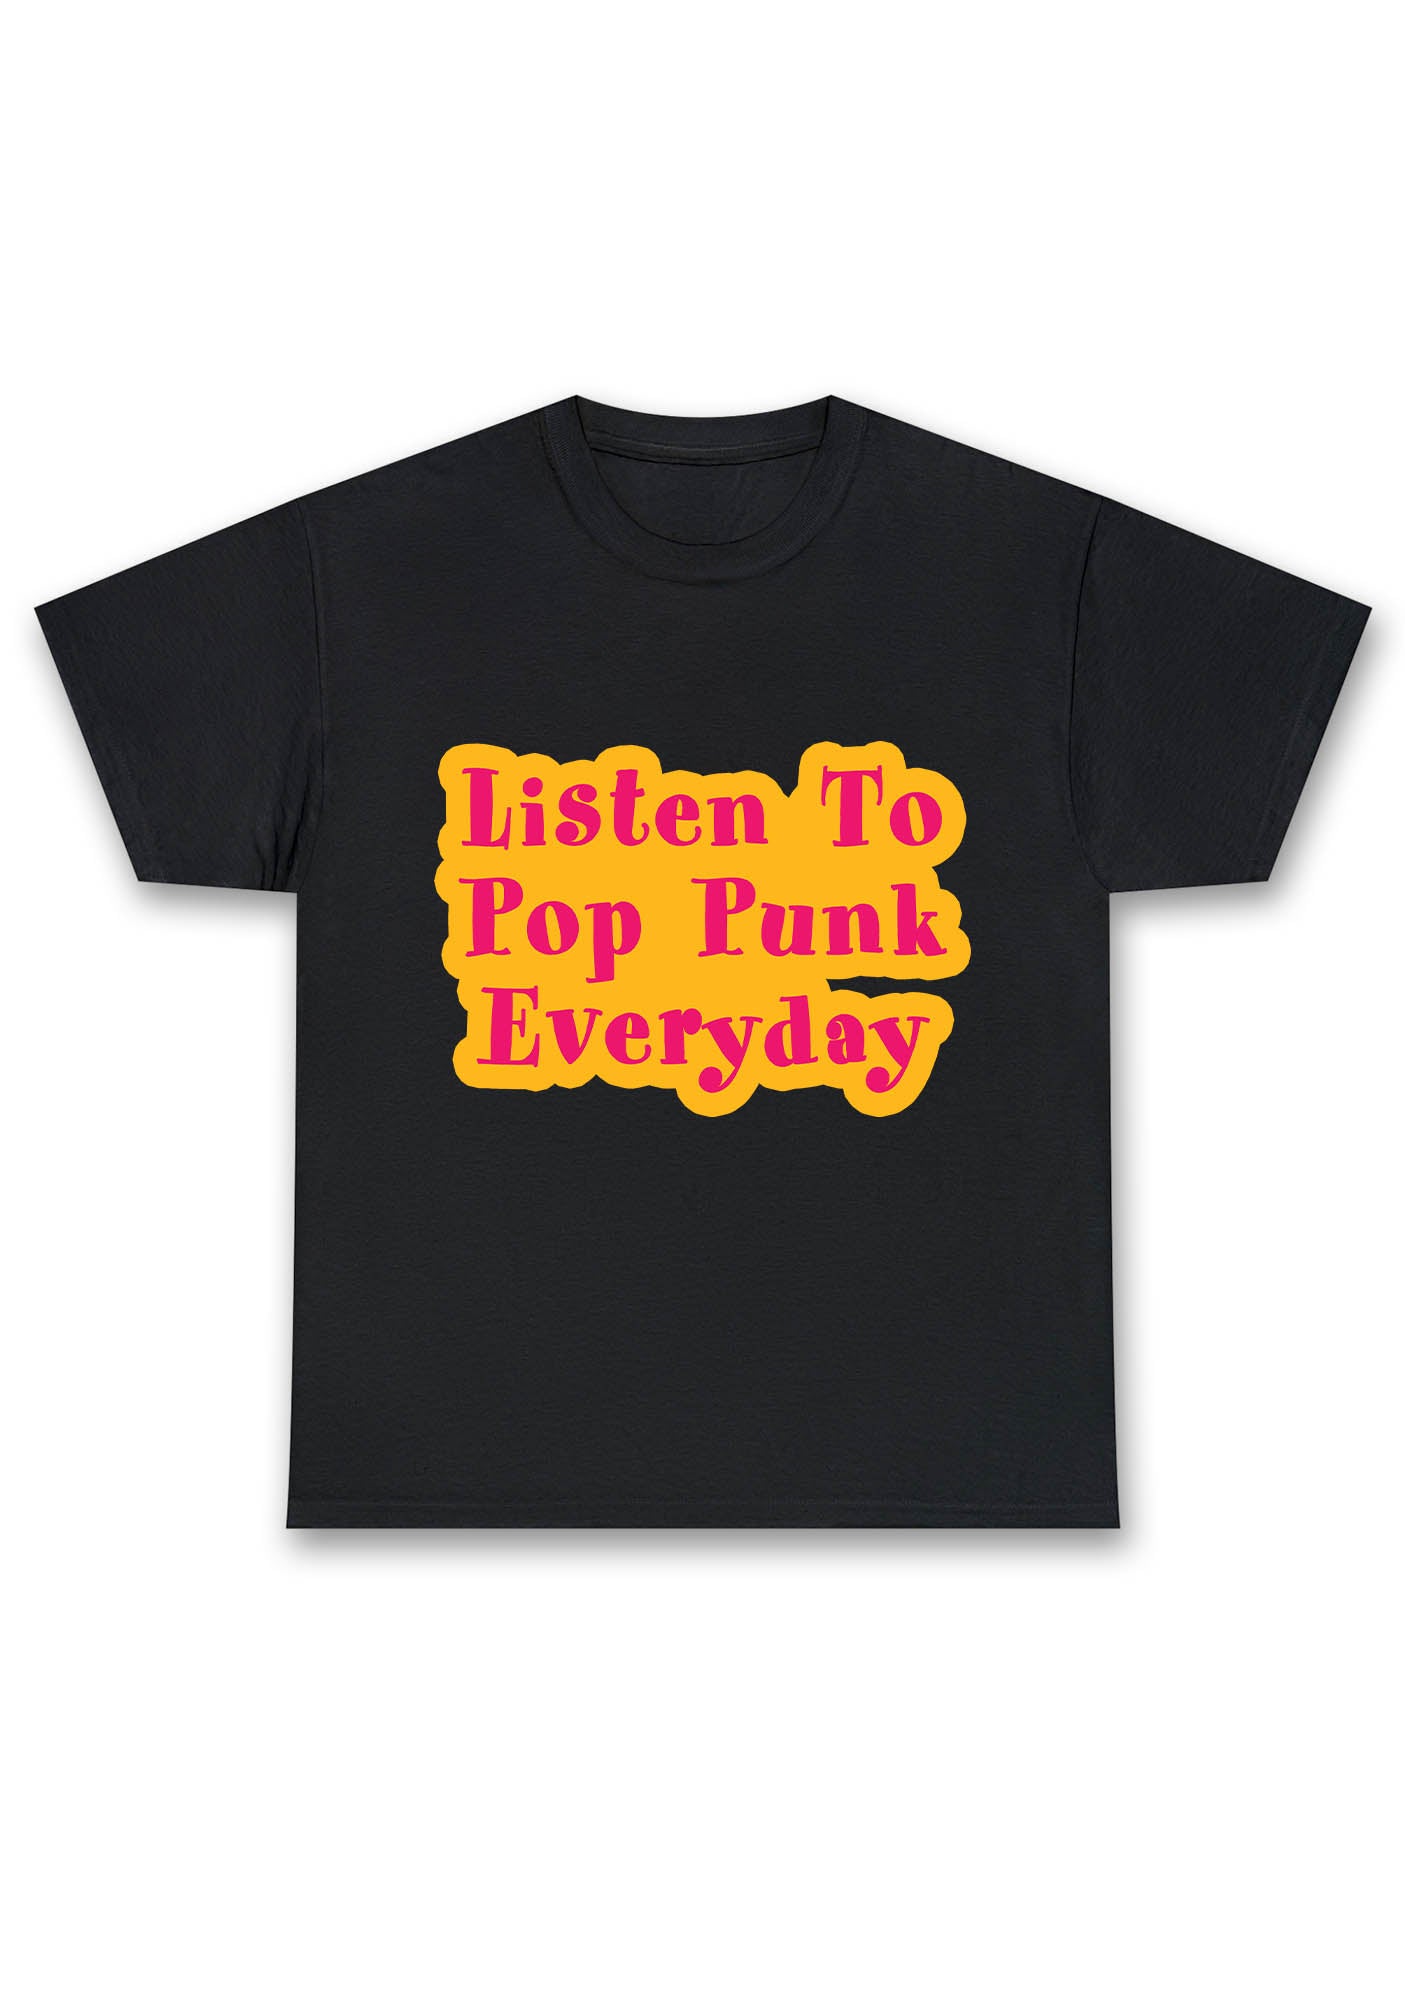 Listen To Pop Punk Everyday Chunky Shirt